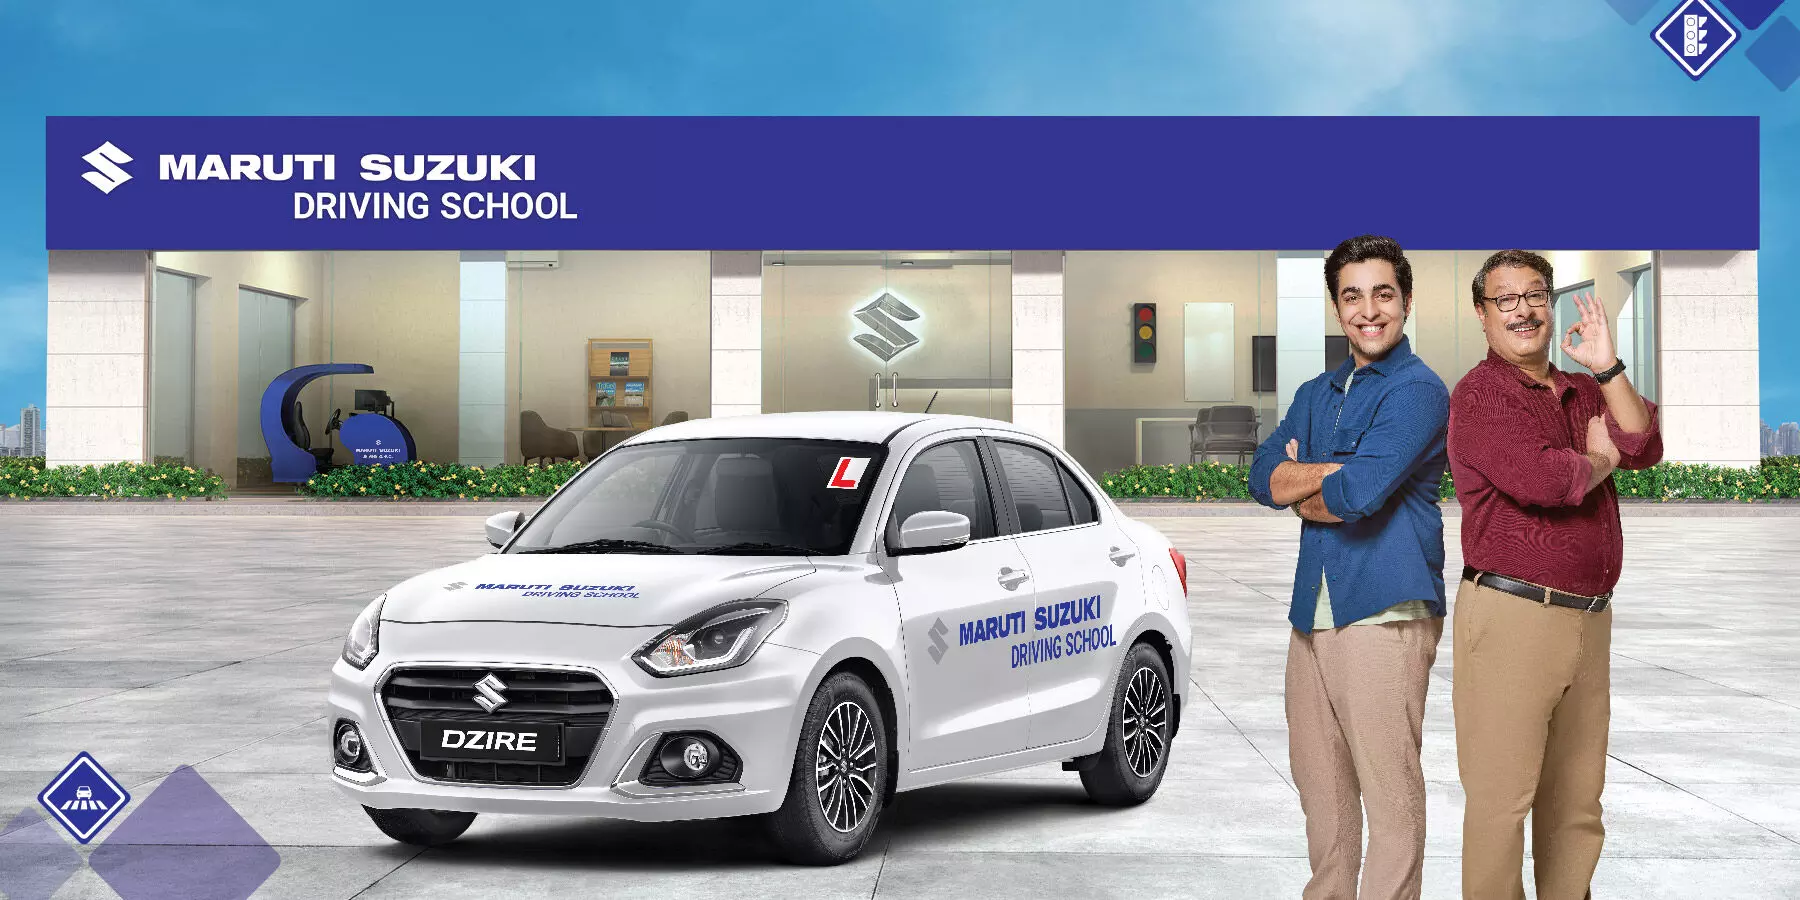 Maruti Suzuki’s enrolls 2 million learner at Maruti Suzuki Driving School